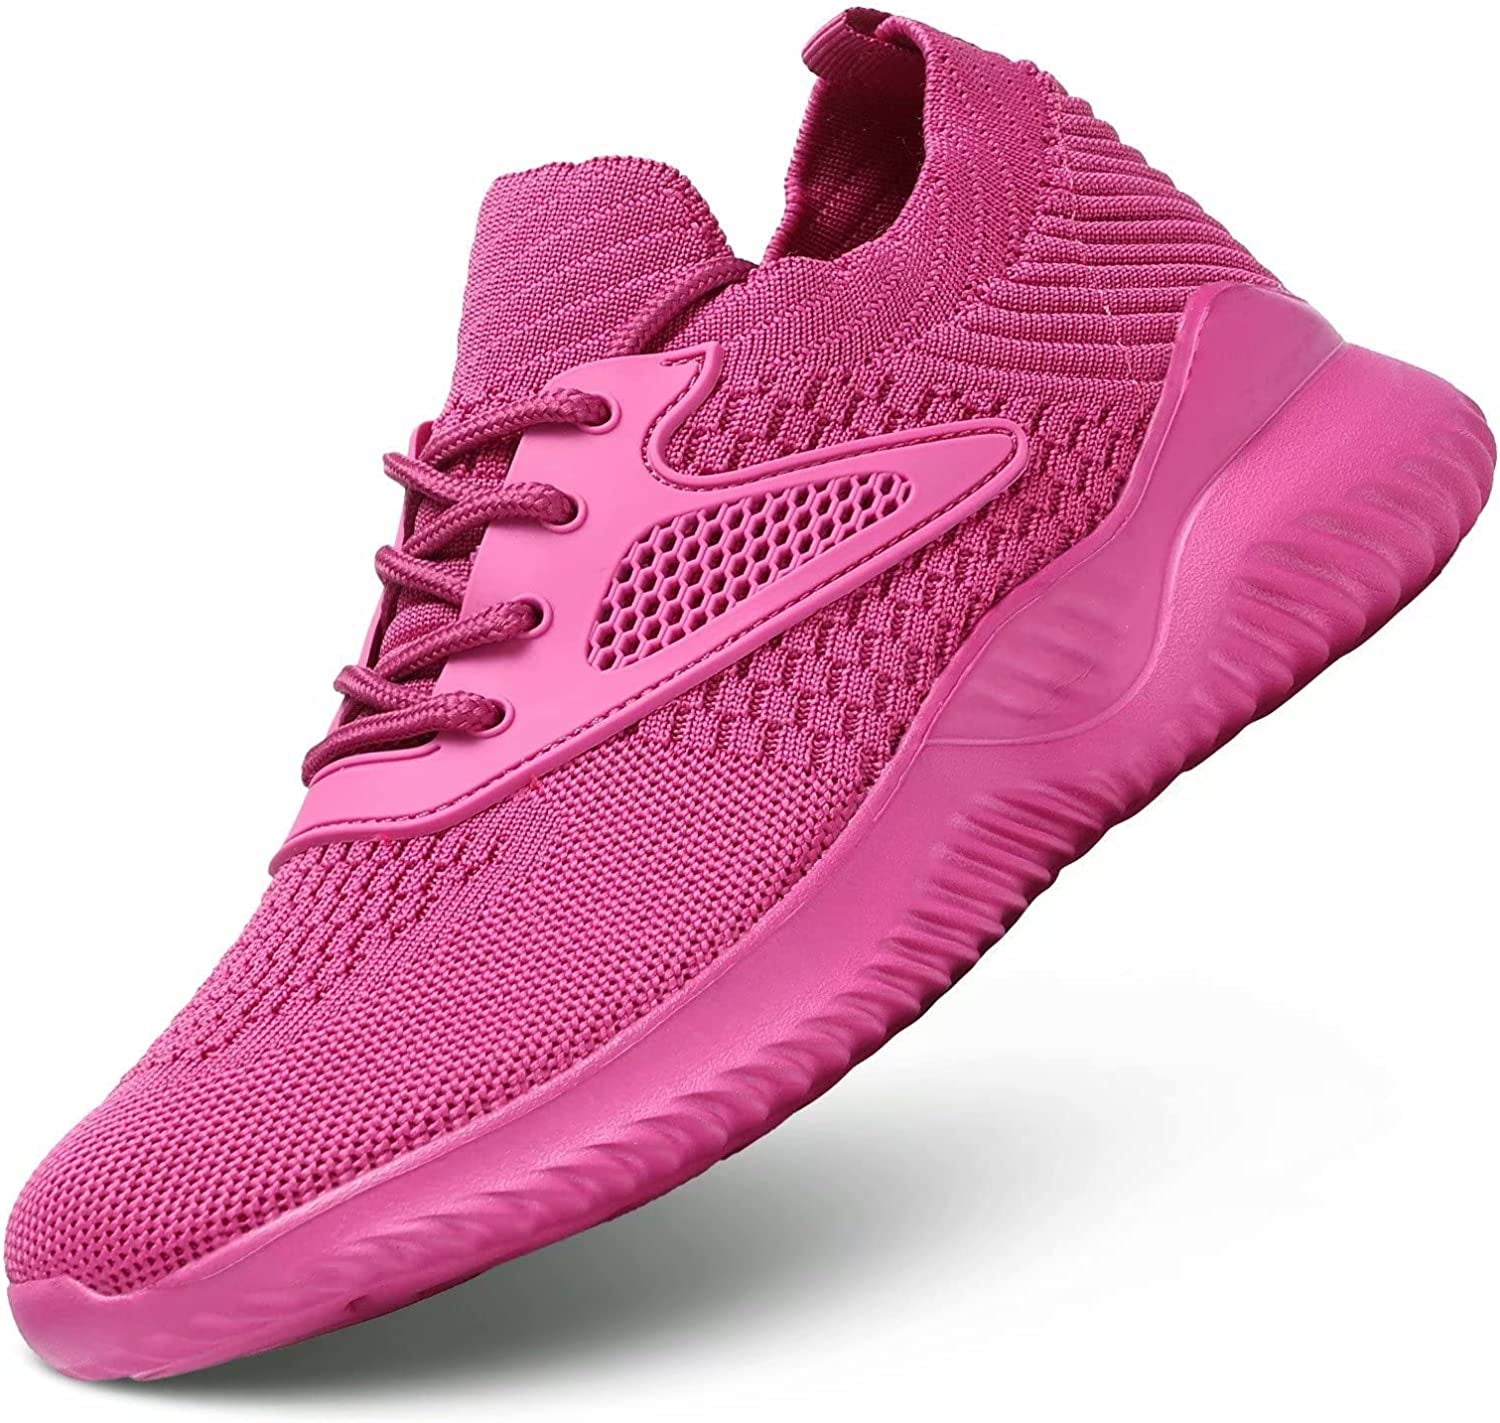 Women's Slip on Walking Shoes Comfort Lightweight Work Casual Tennis Running Ladies Shoes Gym Sport Sneakers